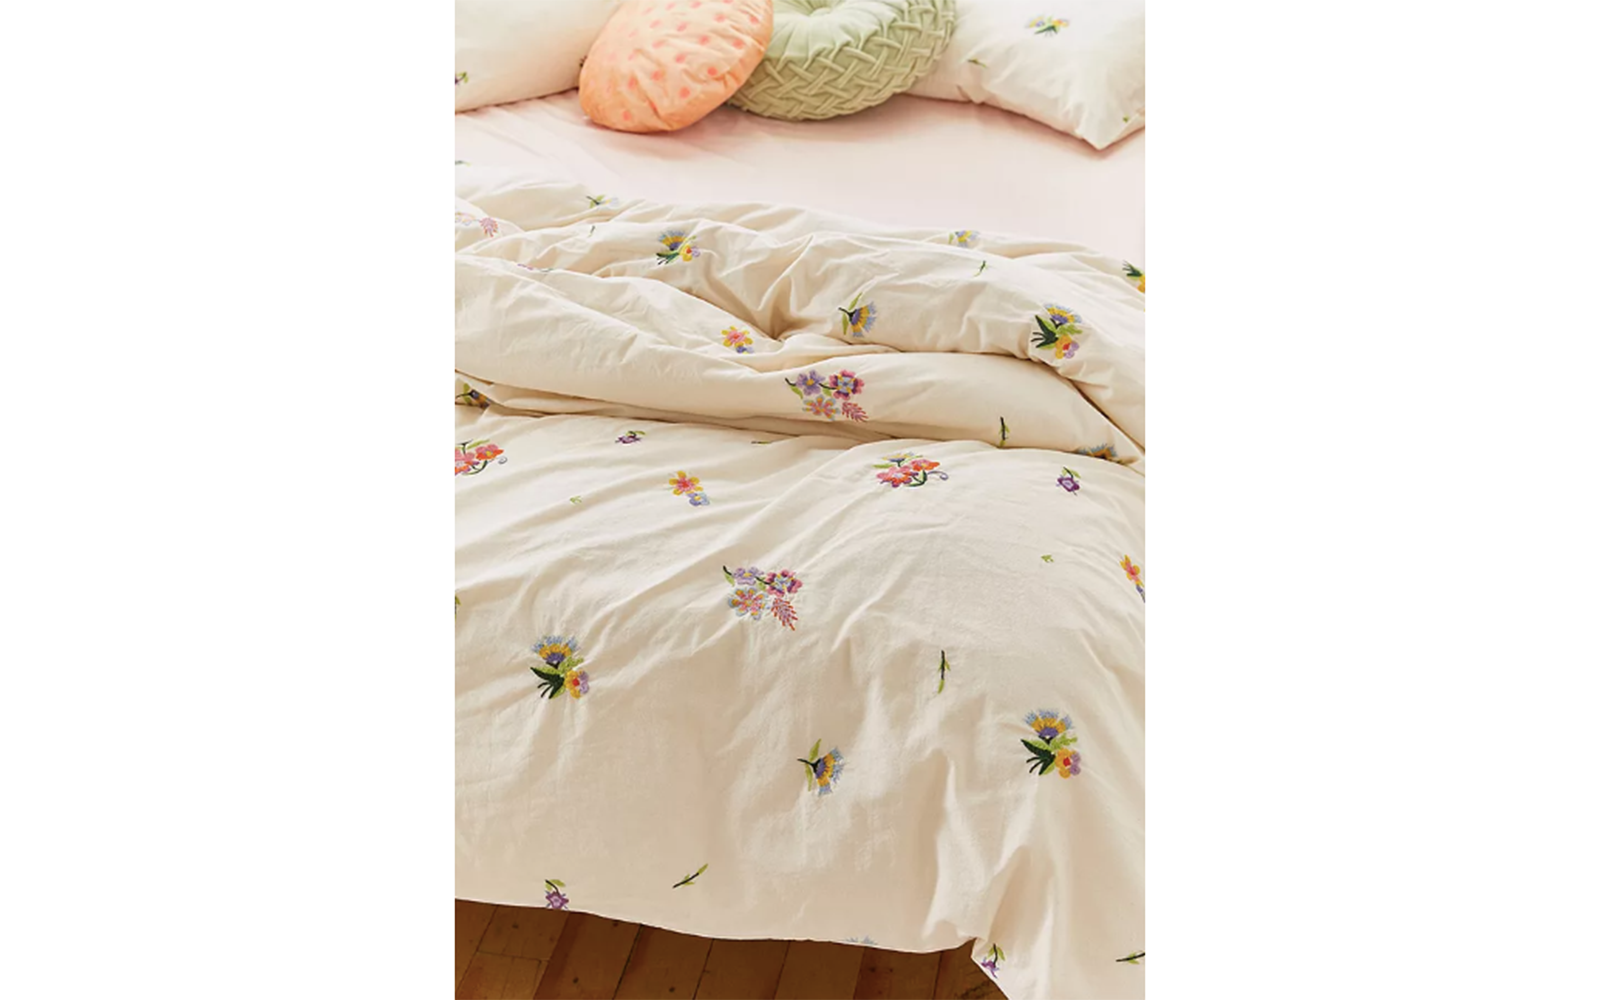 best floral bedding for exuding garden glamour in the home